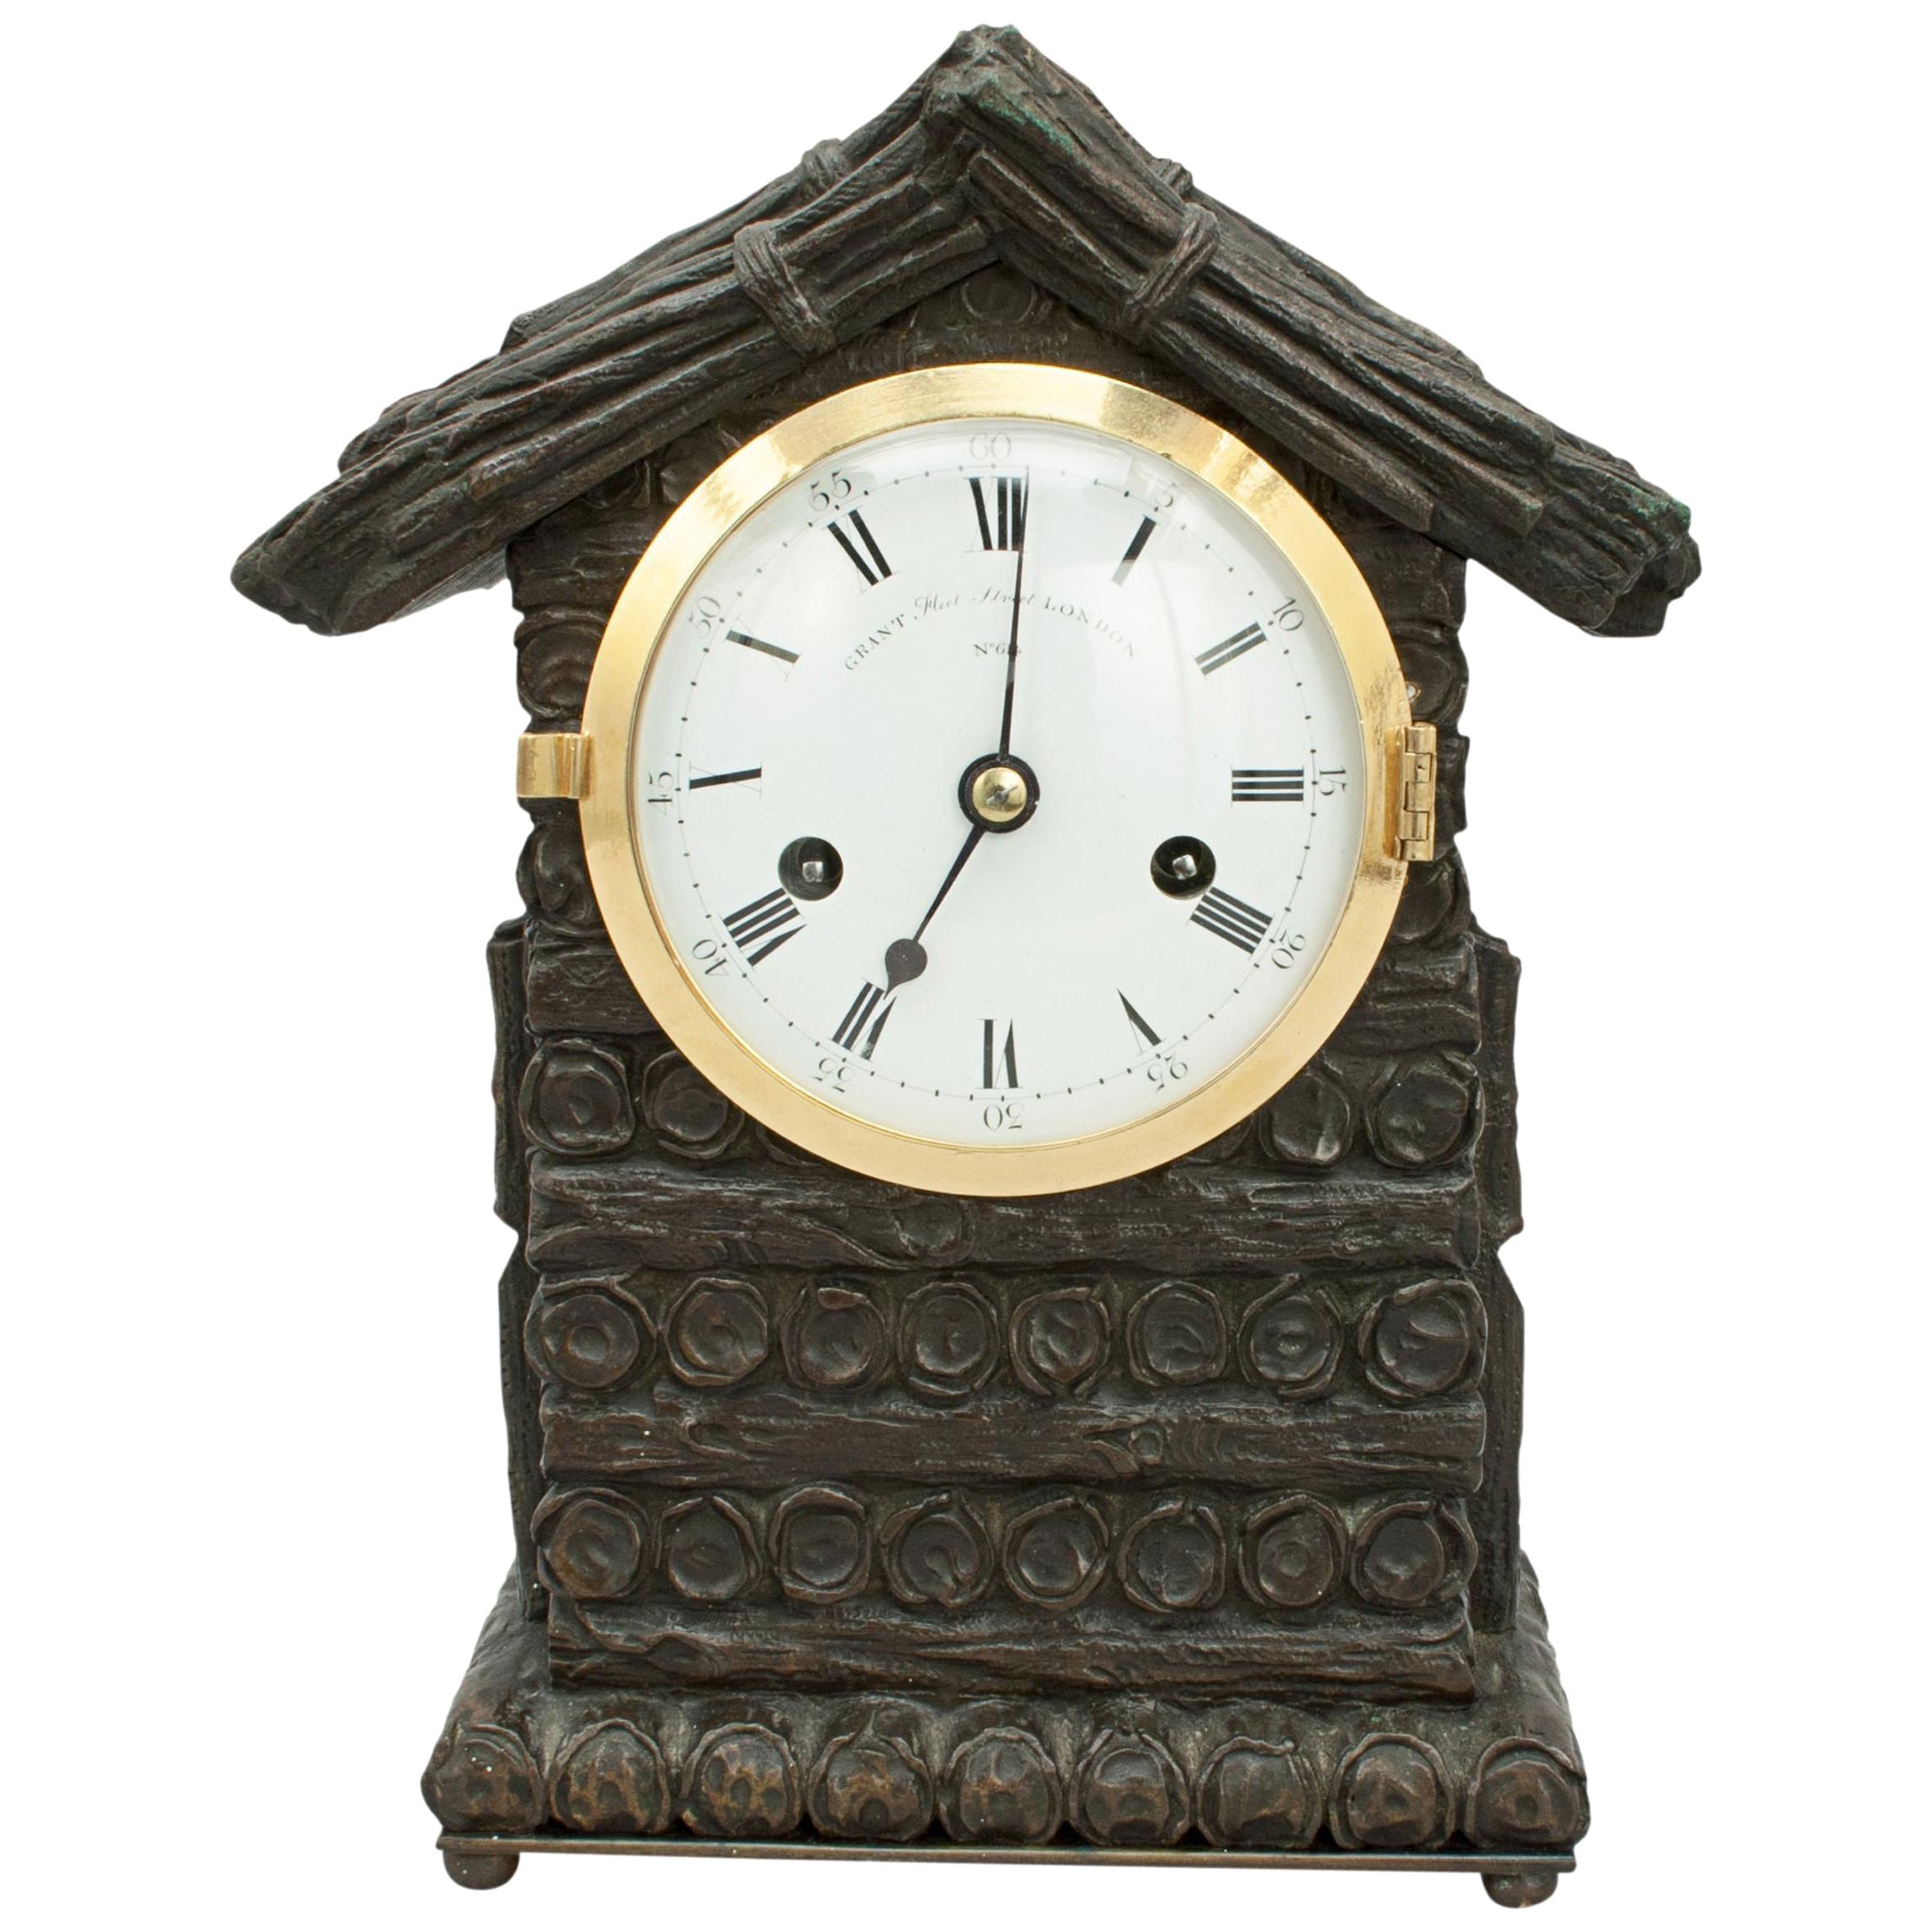 Antique Mantel Clock by Grant, Black Forest Type Design